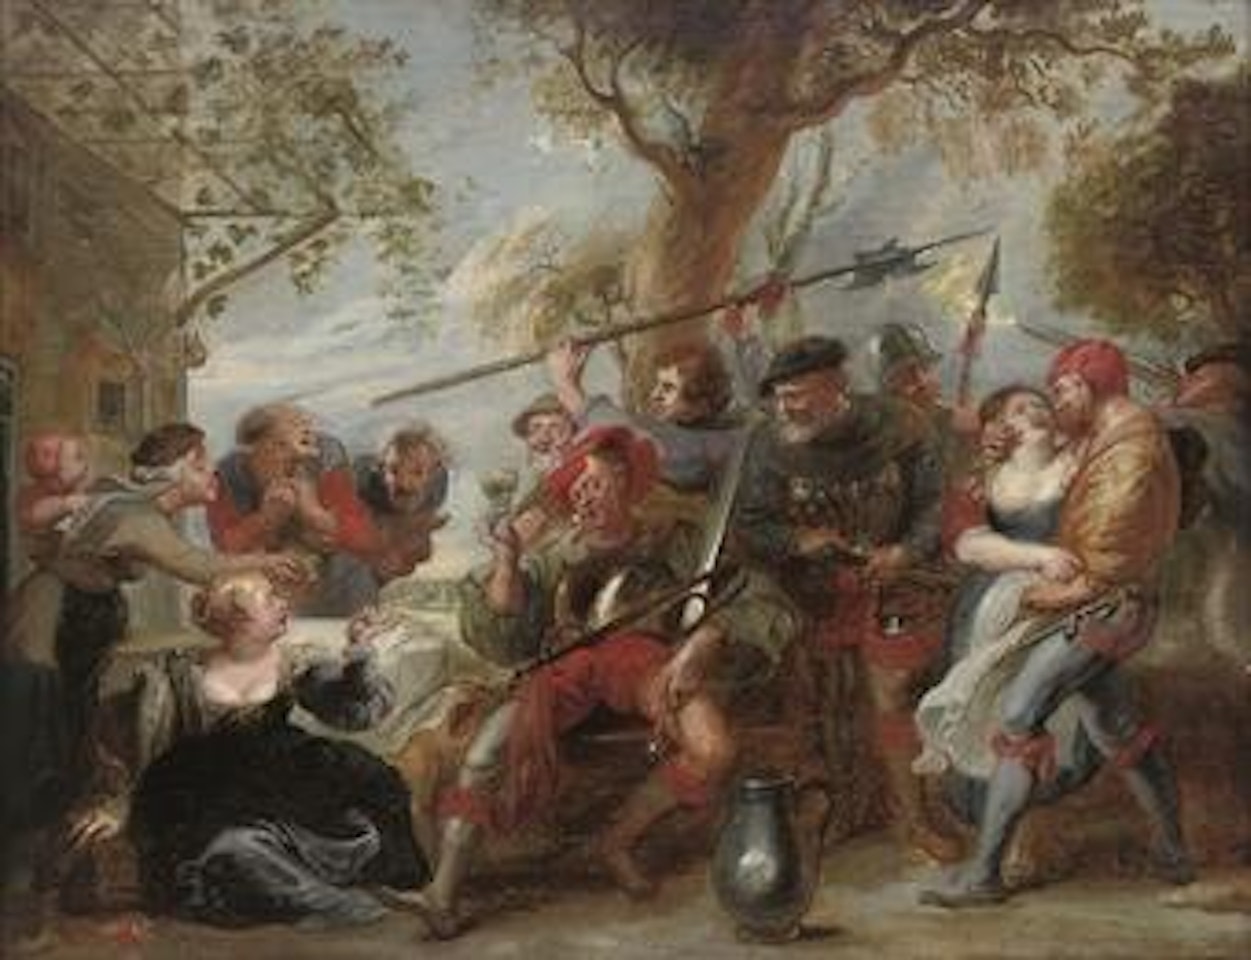 Don Quixote and troops of La Santa Hermandad outside a tavern by Peter Paul Rubens